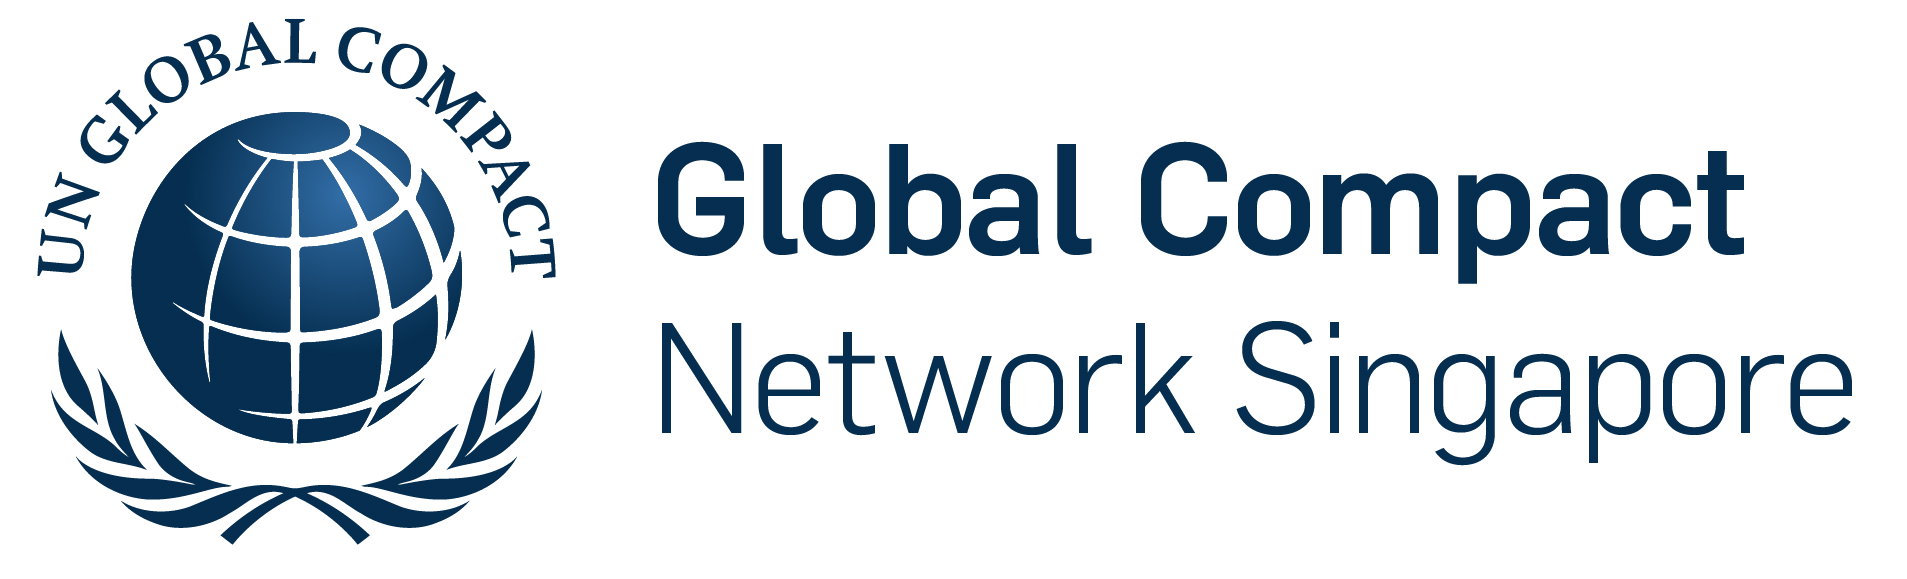 GCNS Logo Transparent Background.png